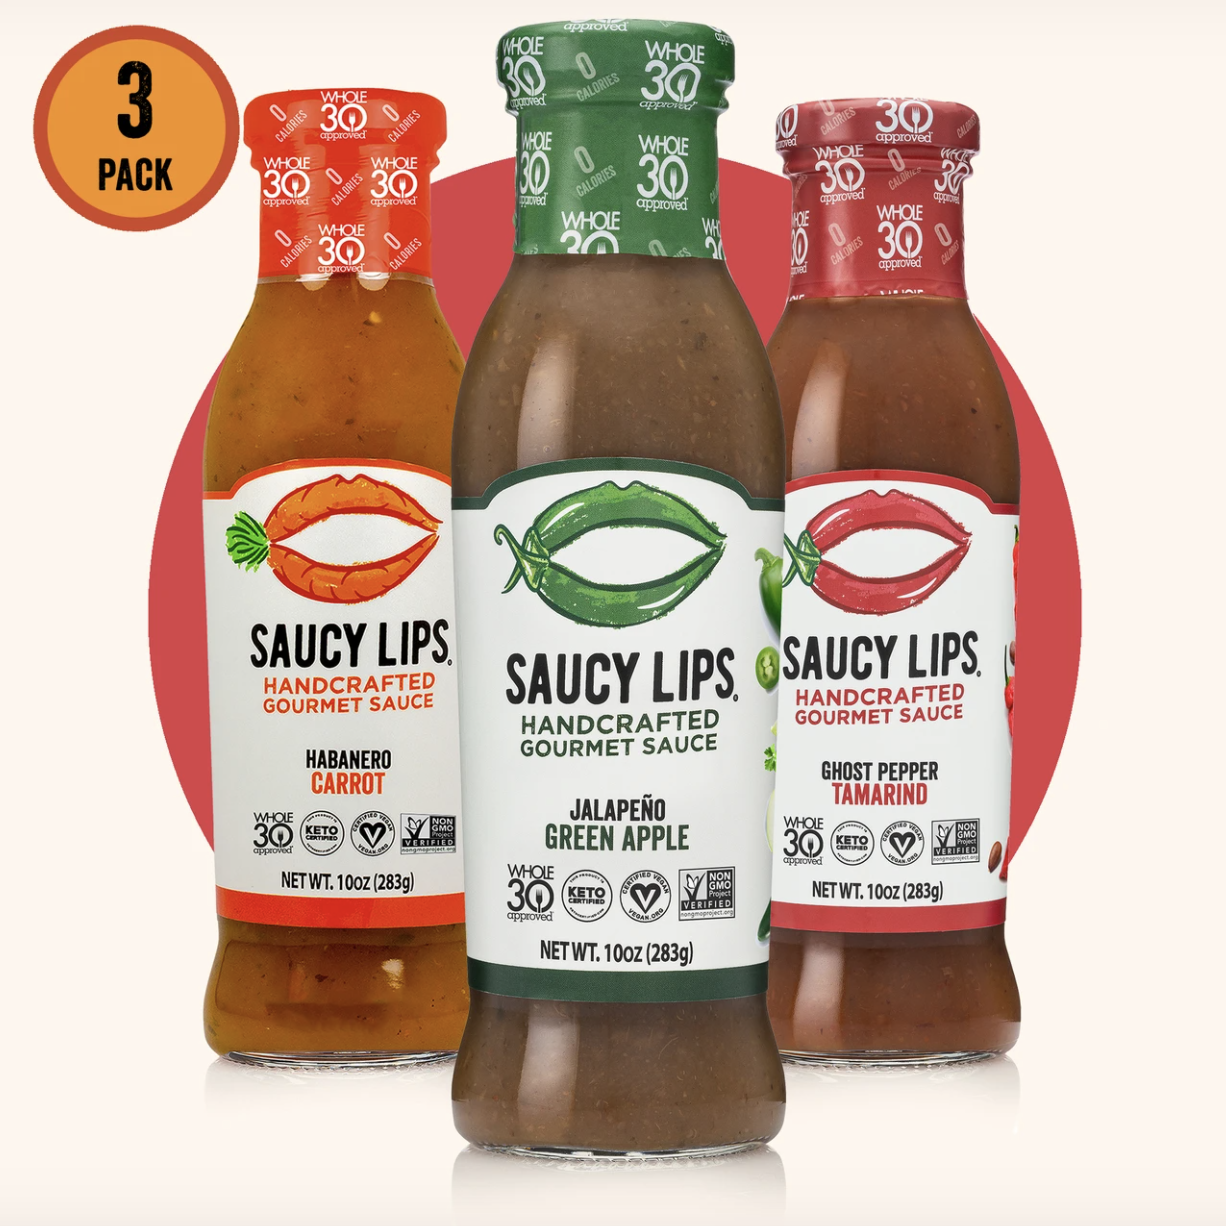 Hot Sauce Sample Pack